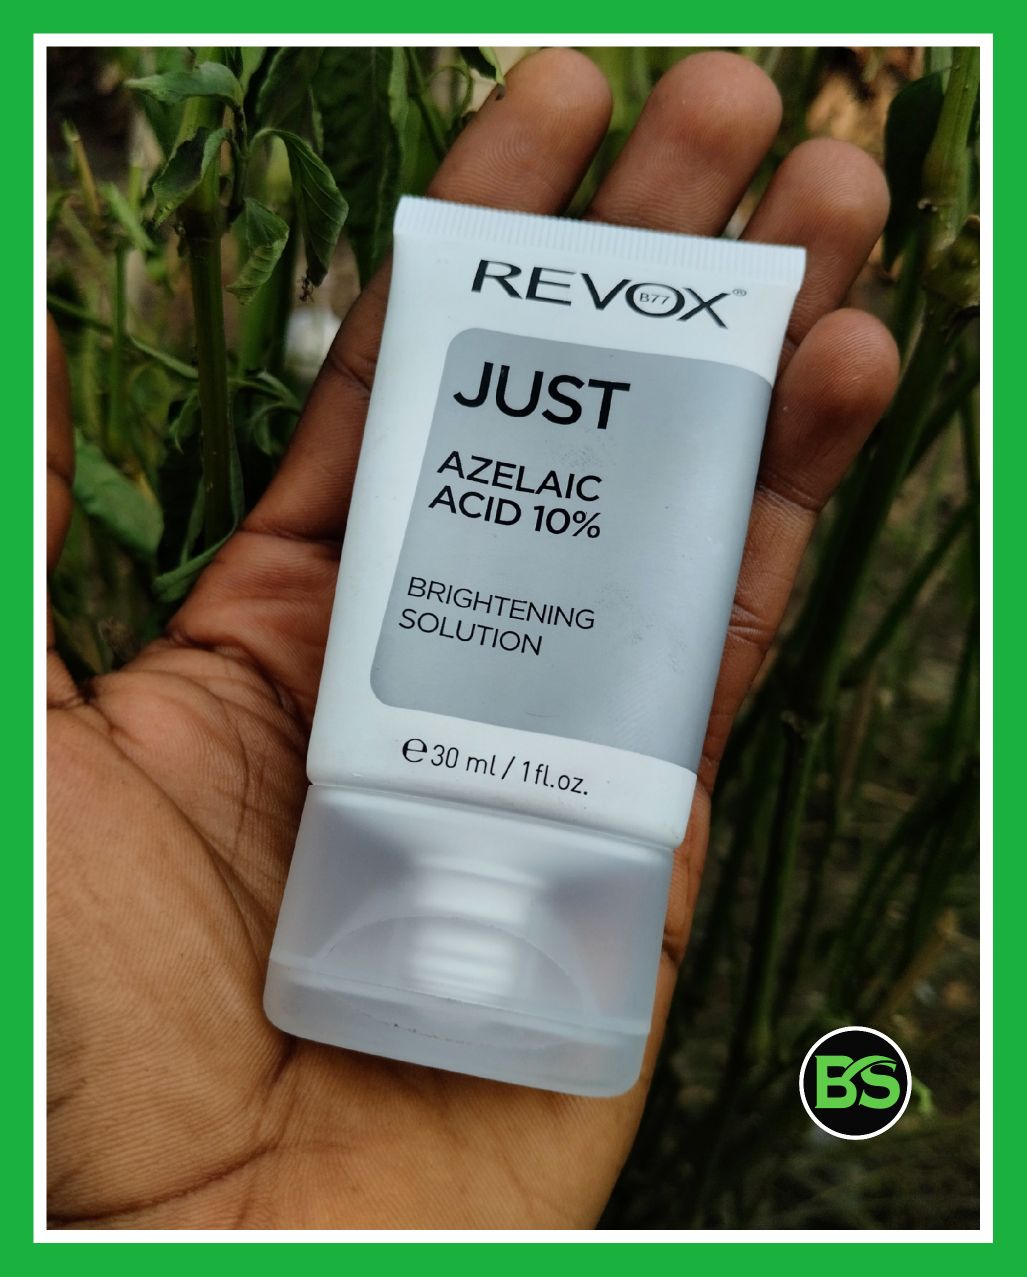 Revox Just Azelaic Acid review 